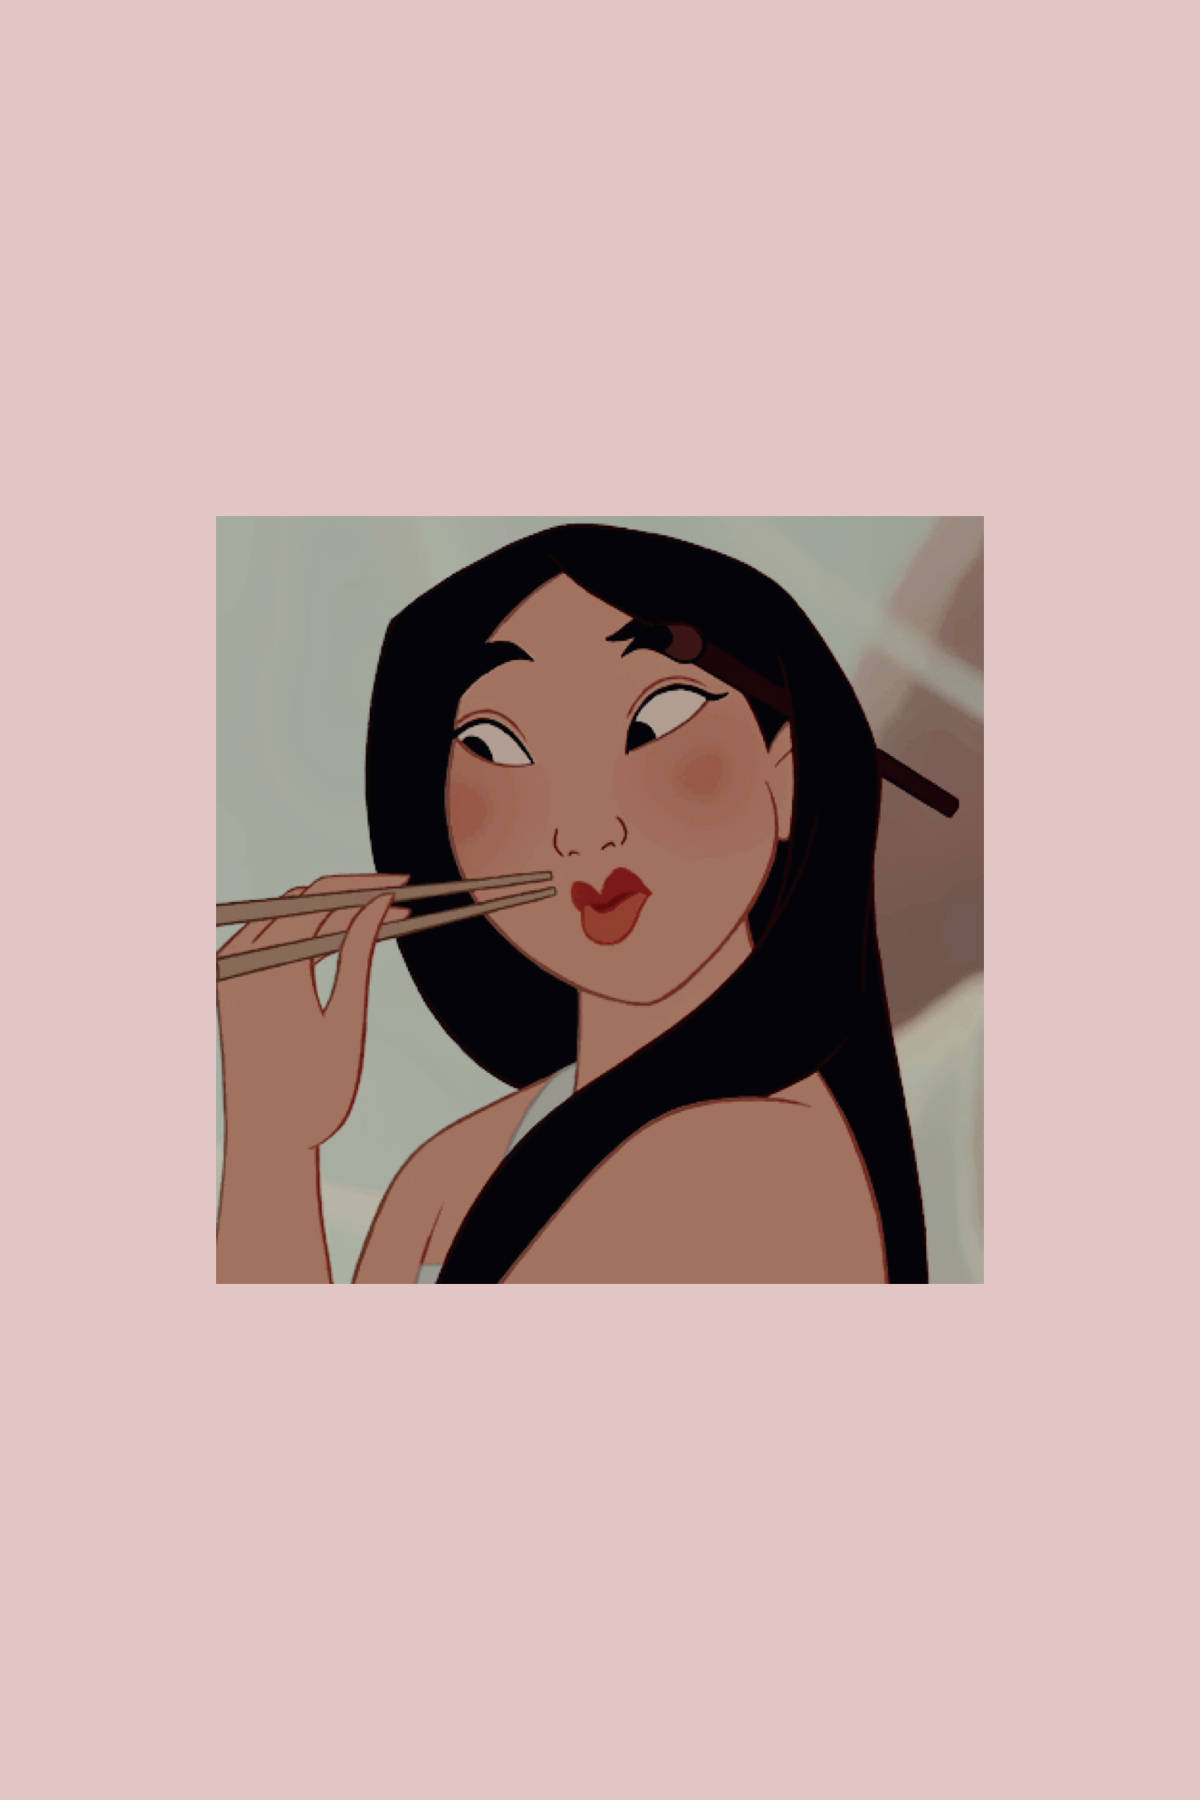 Aesthetic Cartoon Mulan Eating With Chopsticks